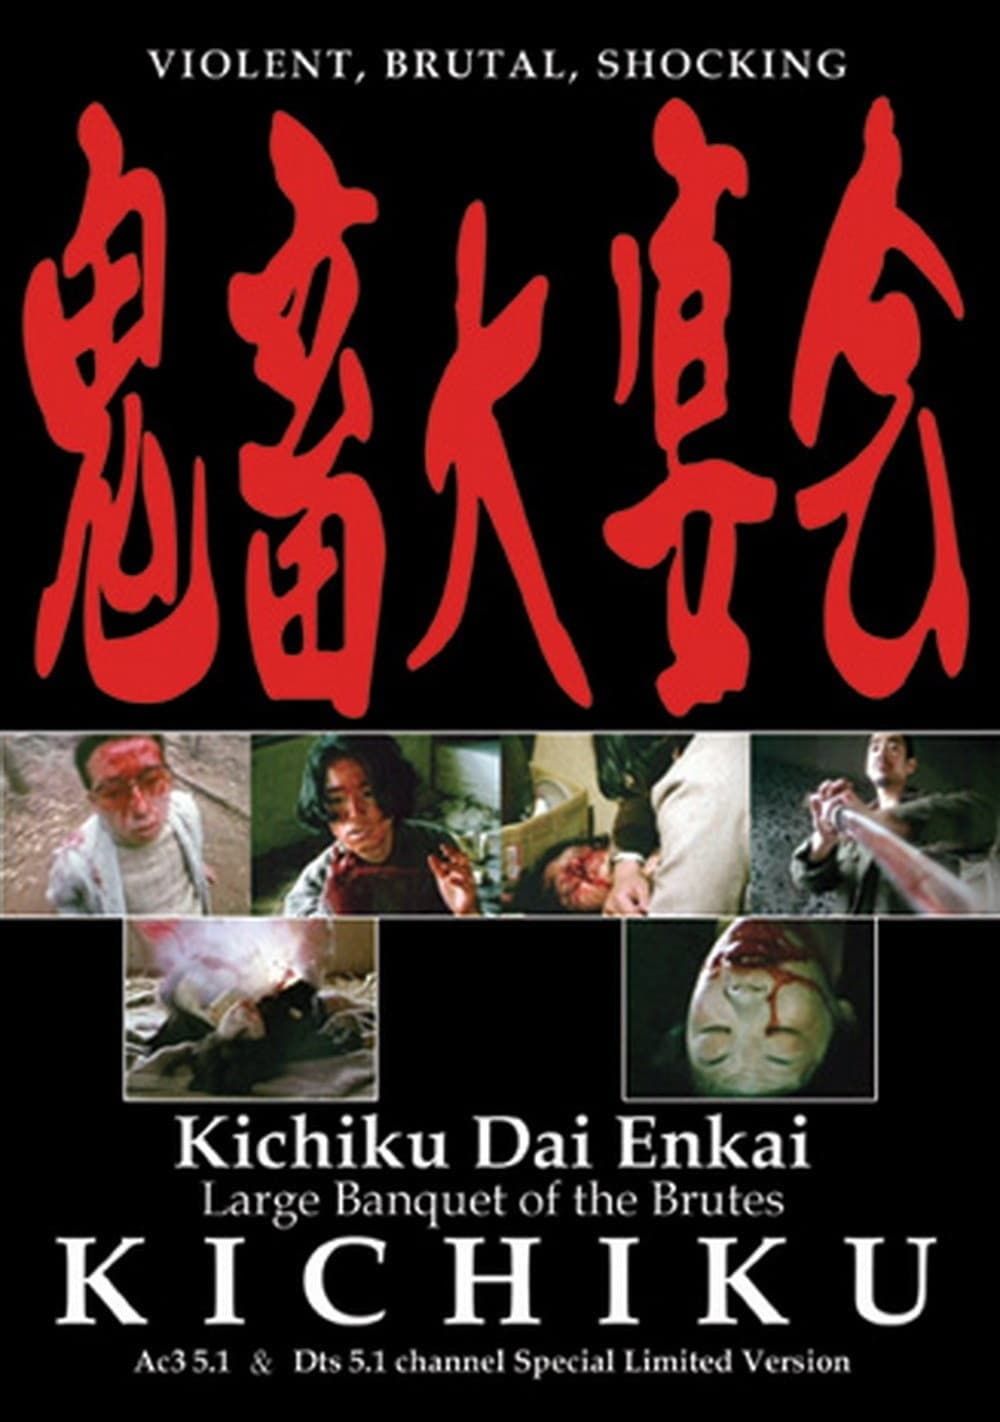 Barakamon Yakamashika/Urusai (TV Episode 2014) - IMDb